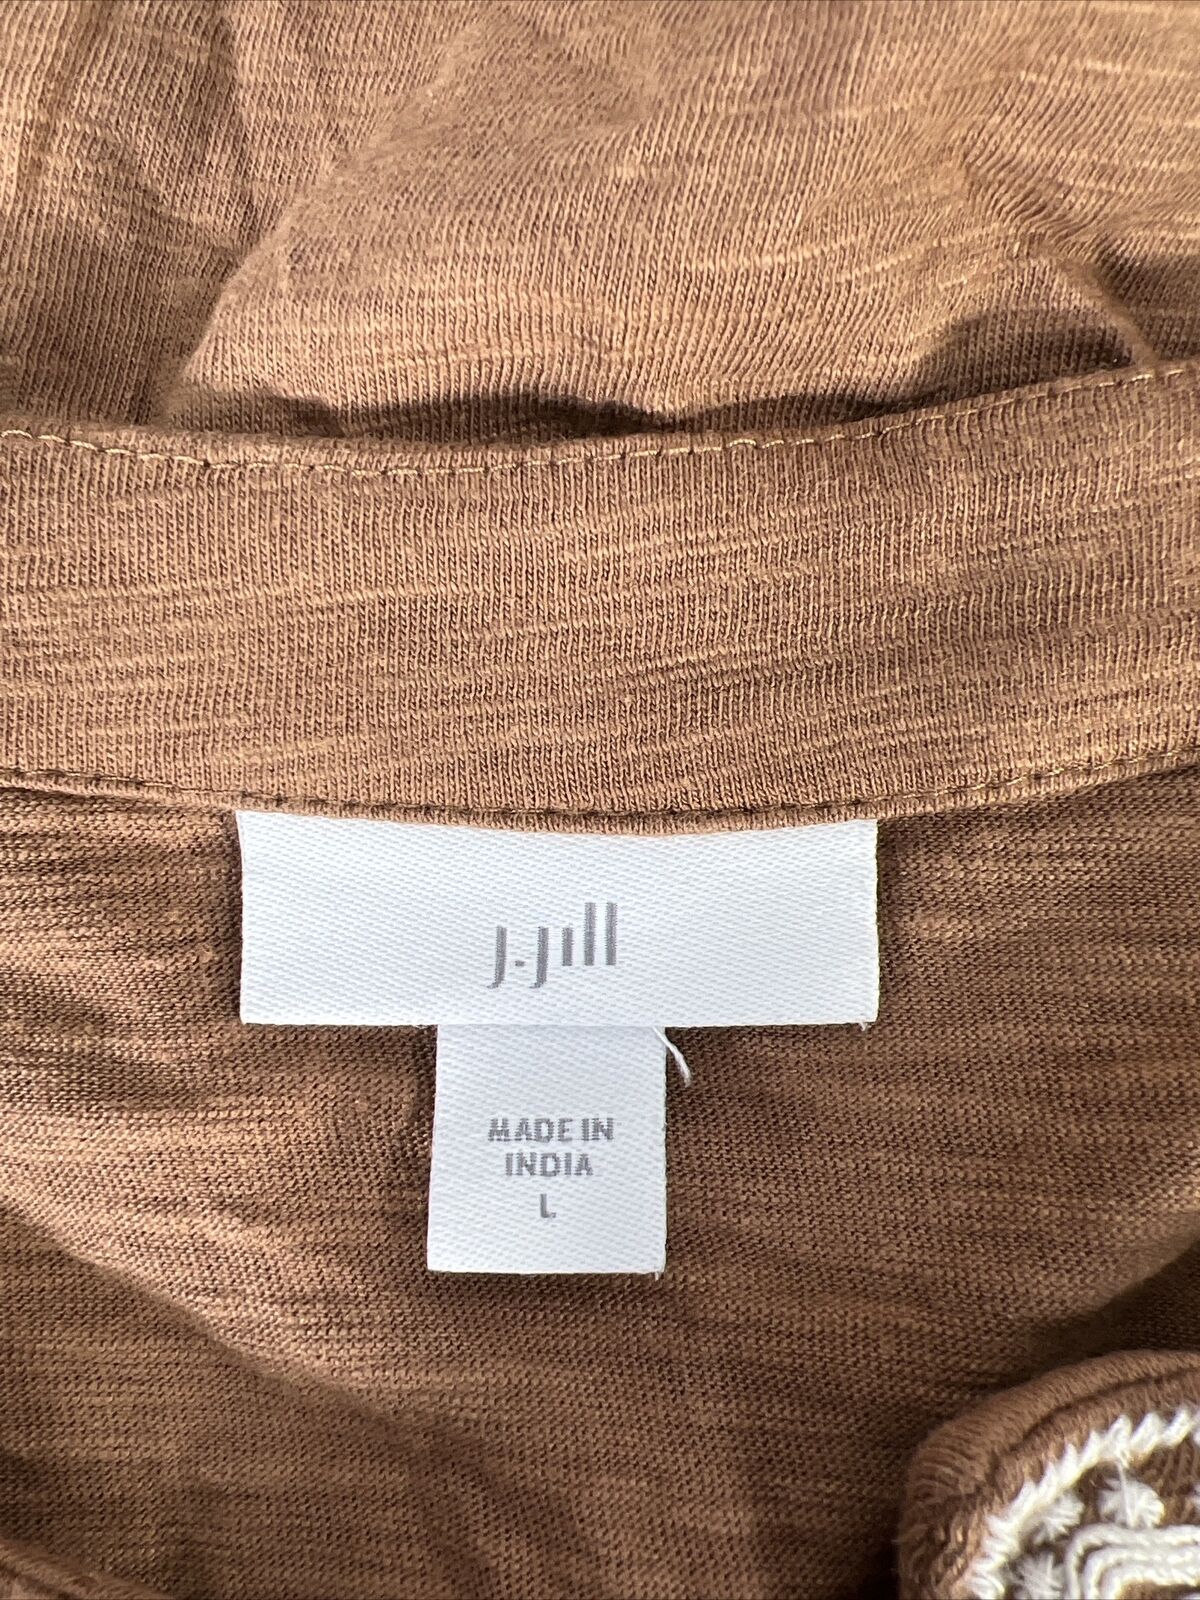 J. Jill Women's Brown Floral Embroidered Sleeveless Tank - L